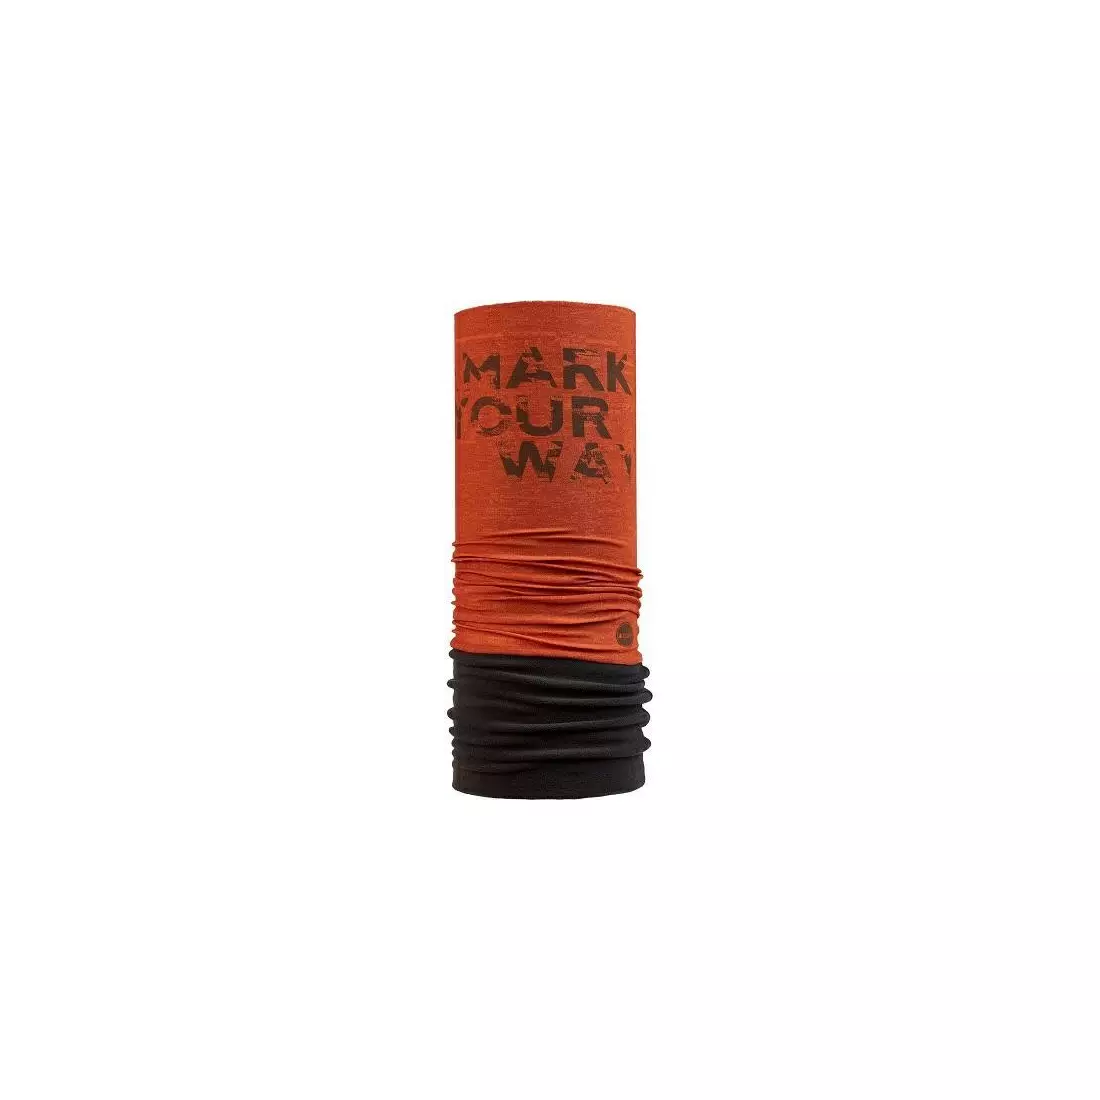 CAIRN multifunkčný šál MALAWI POLAR TUBE orange black